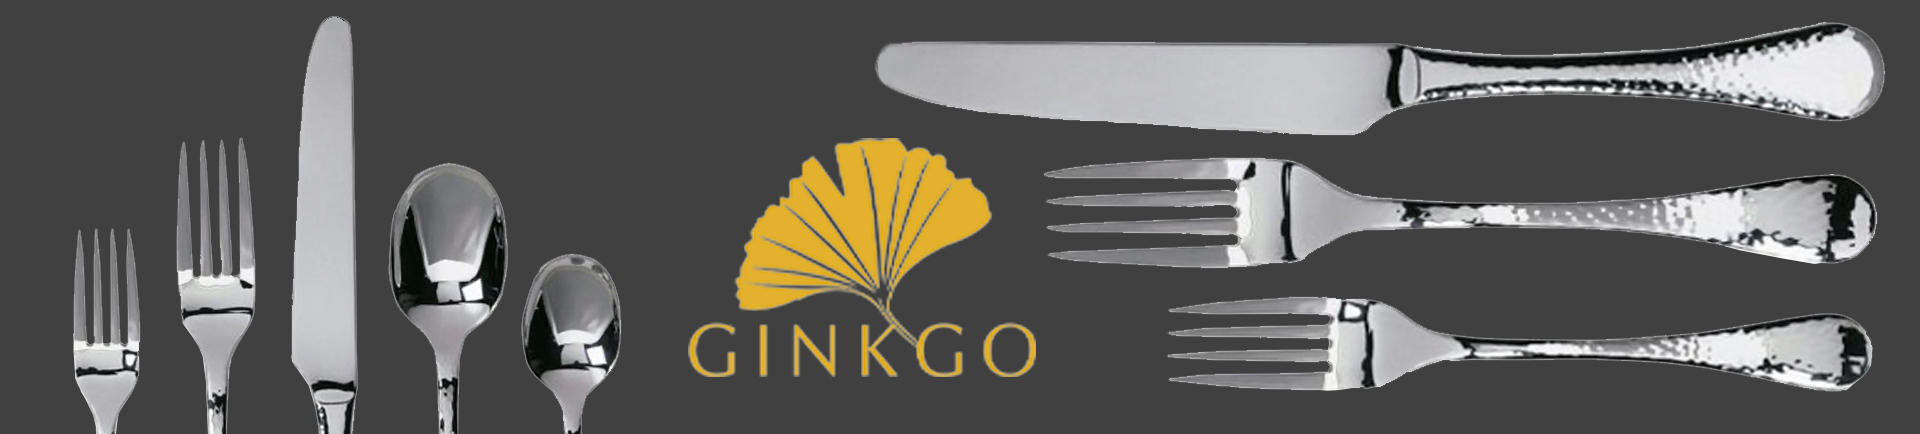 Ginkgo International, Ltd. banner